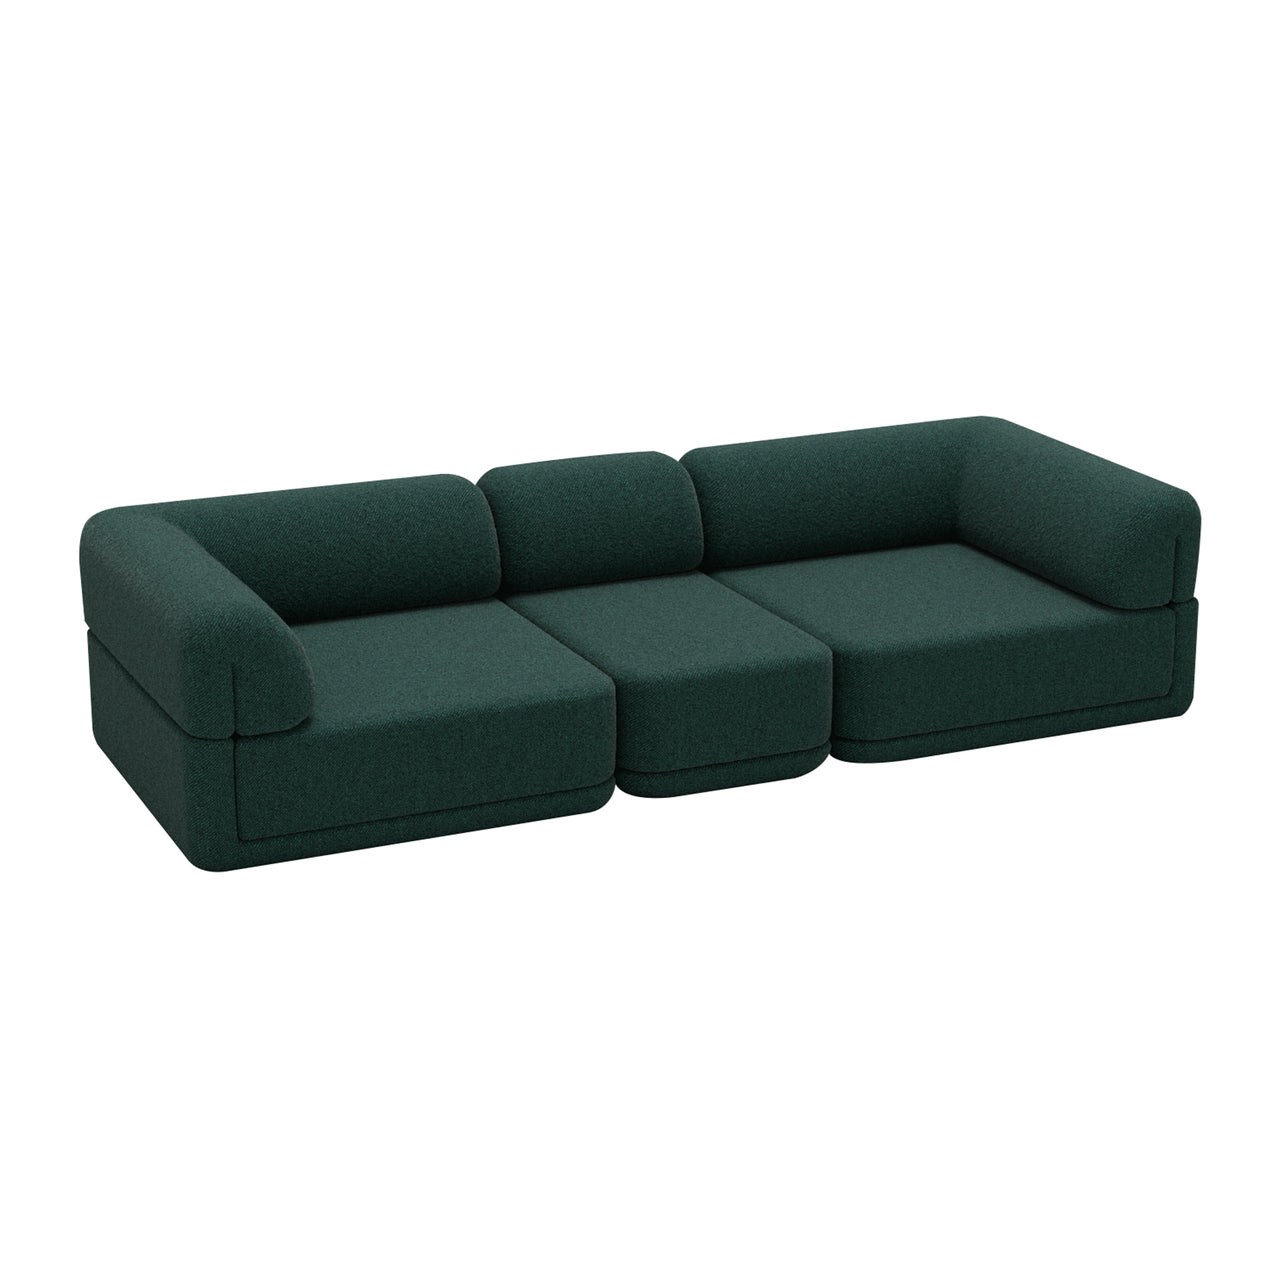 Cube Modular Sofa: Slim + Configuration 6 + Boucle Forest Green